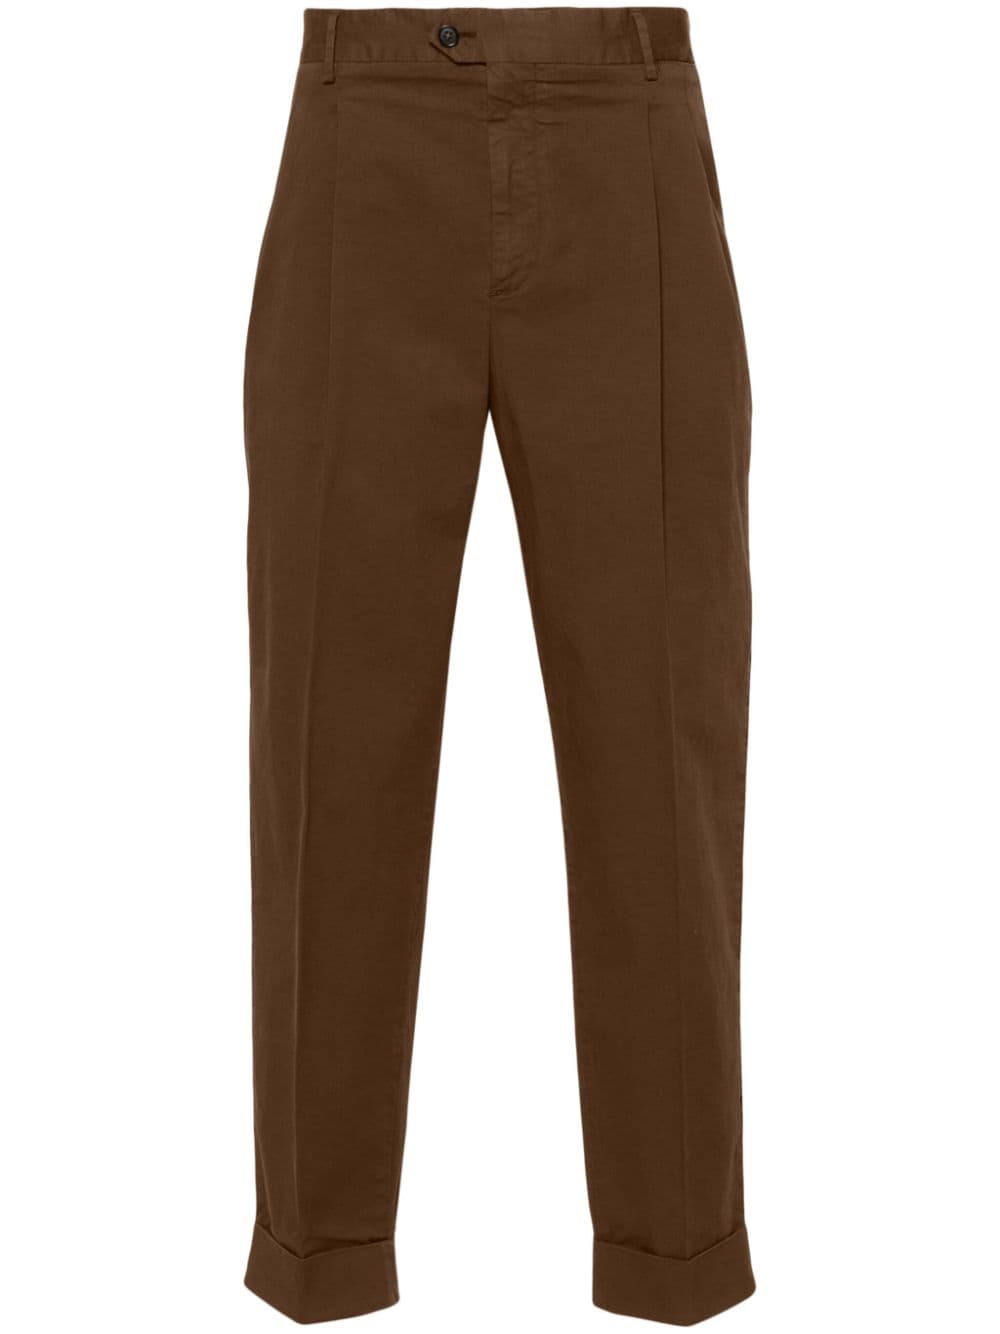 pleat-detail trousers